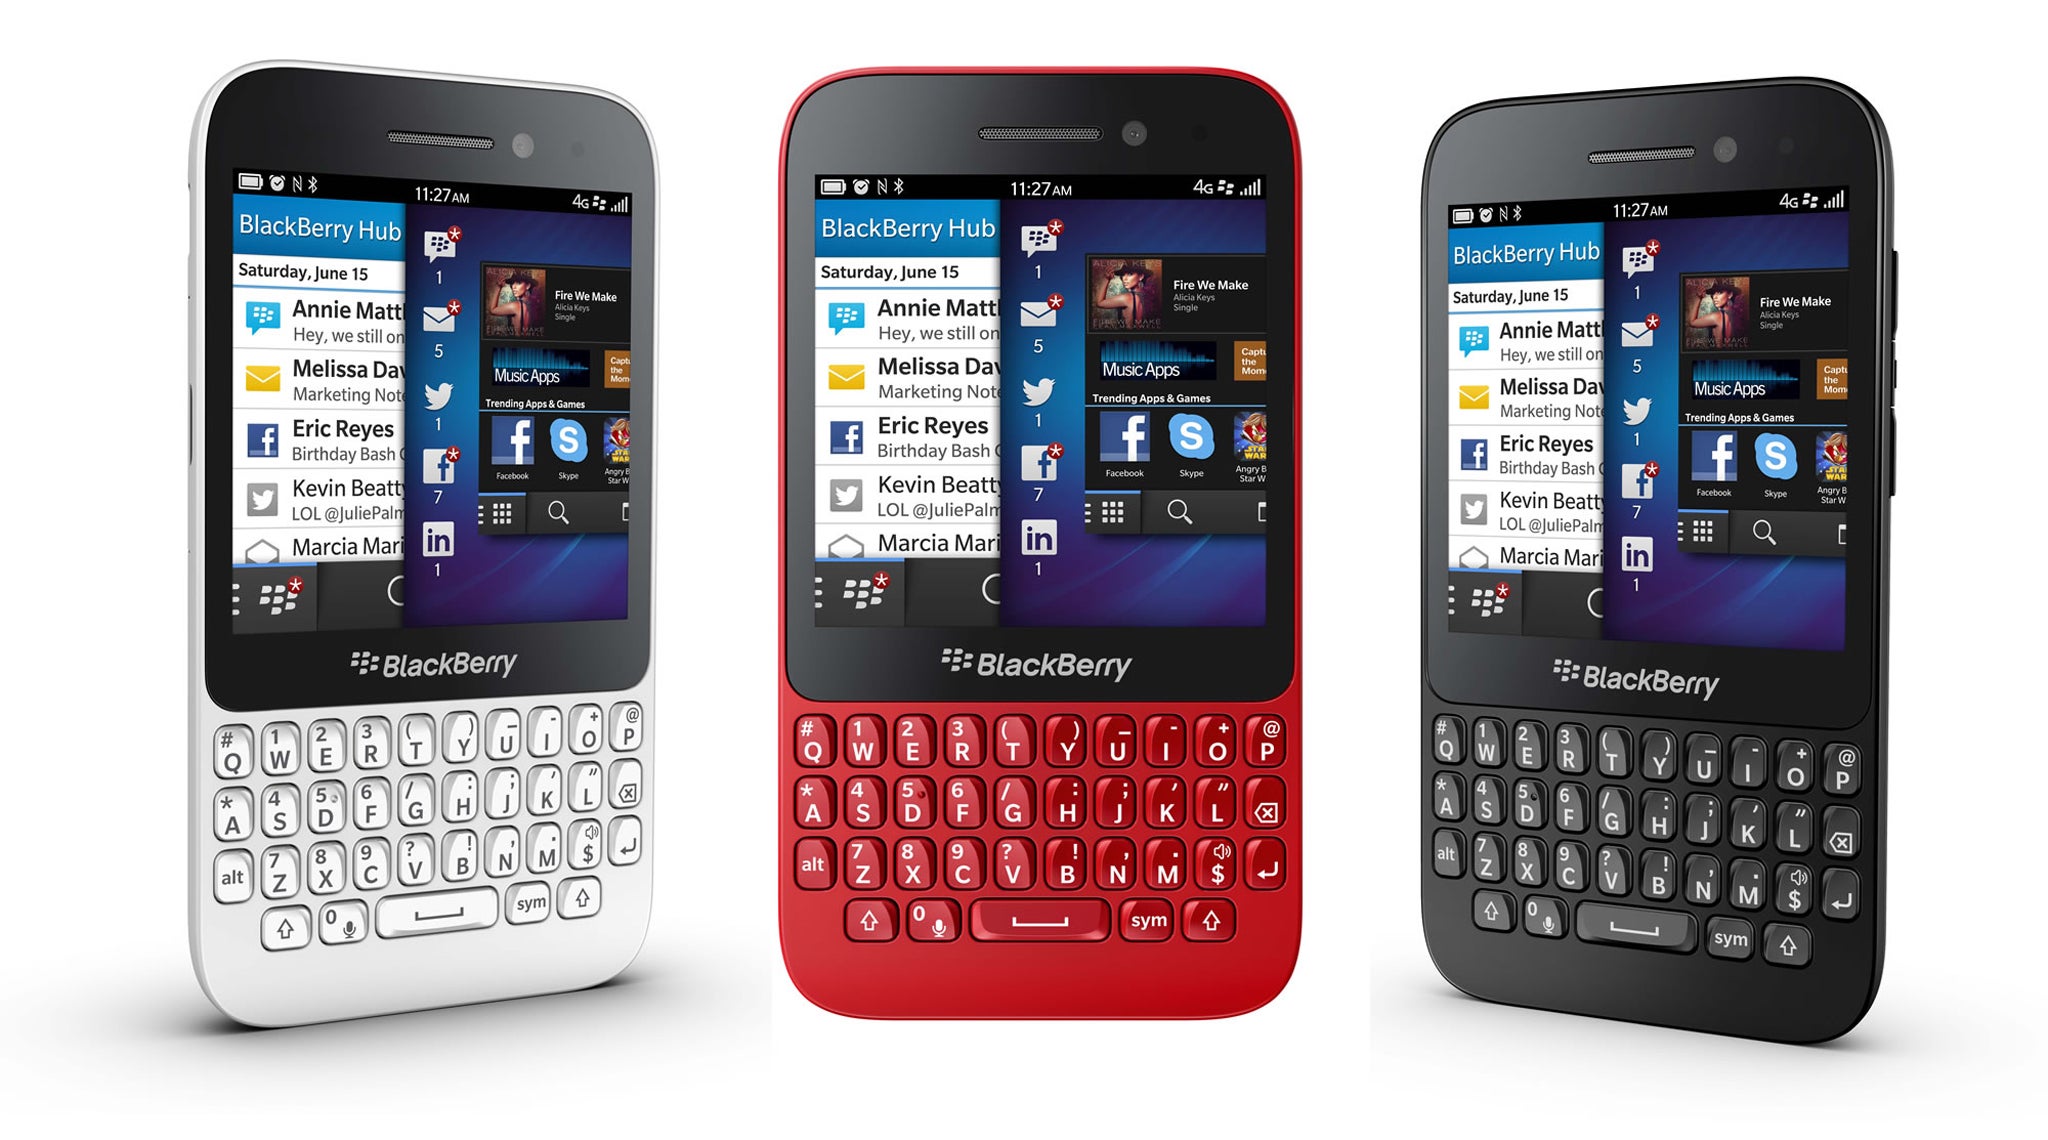 The new Blackberry Q5